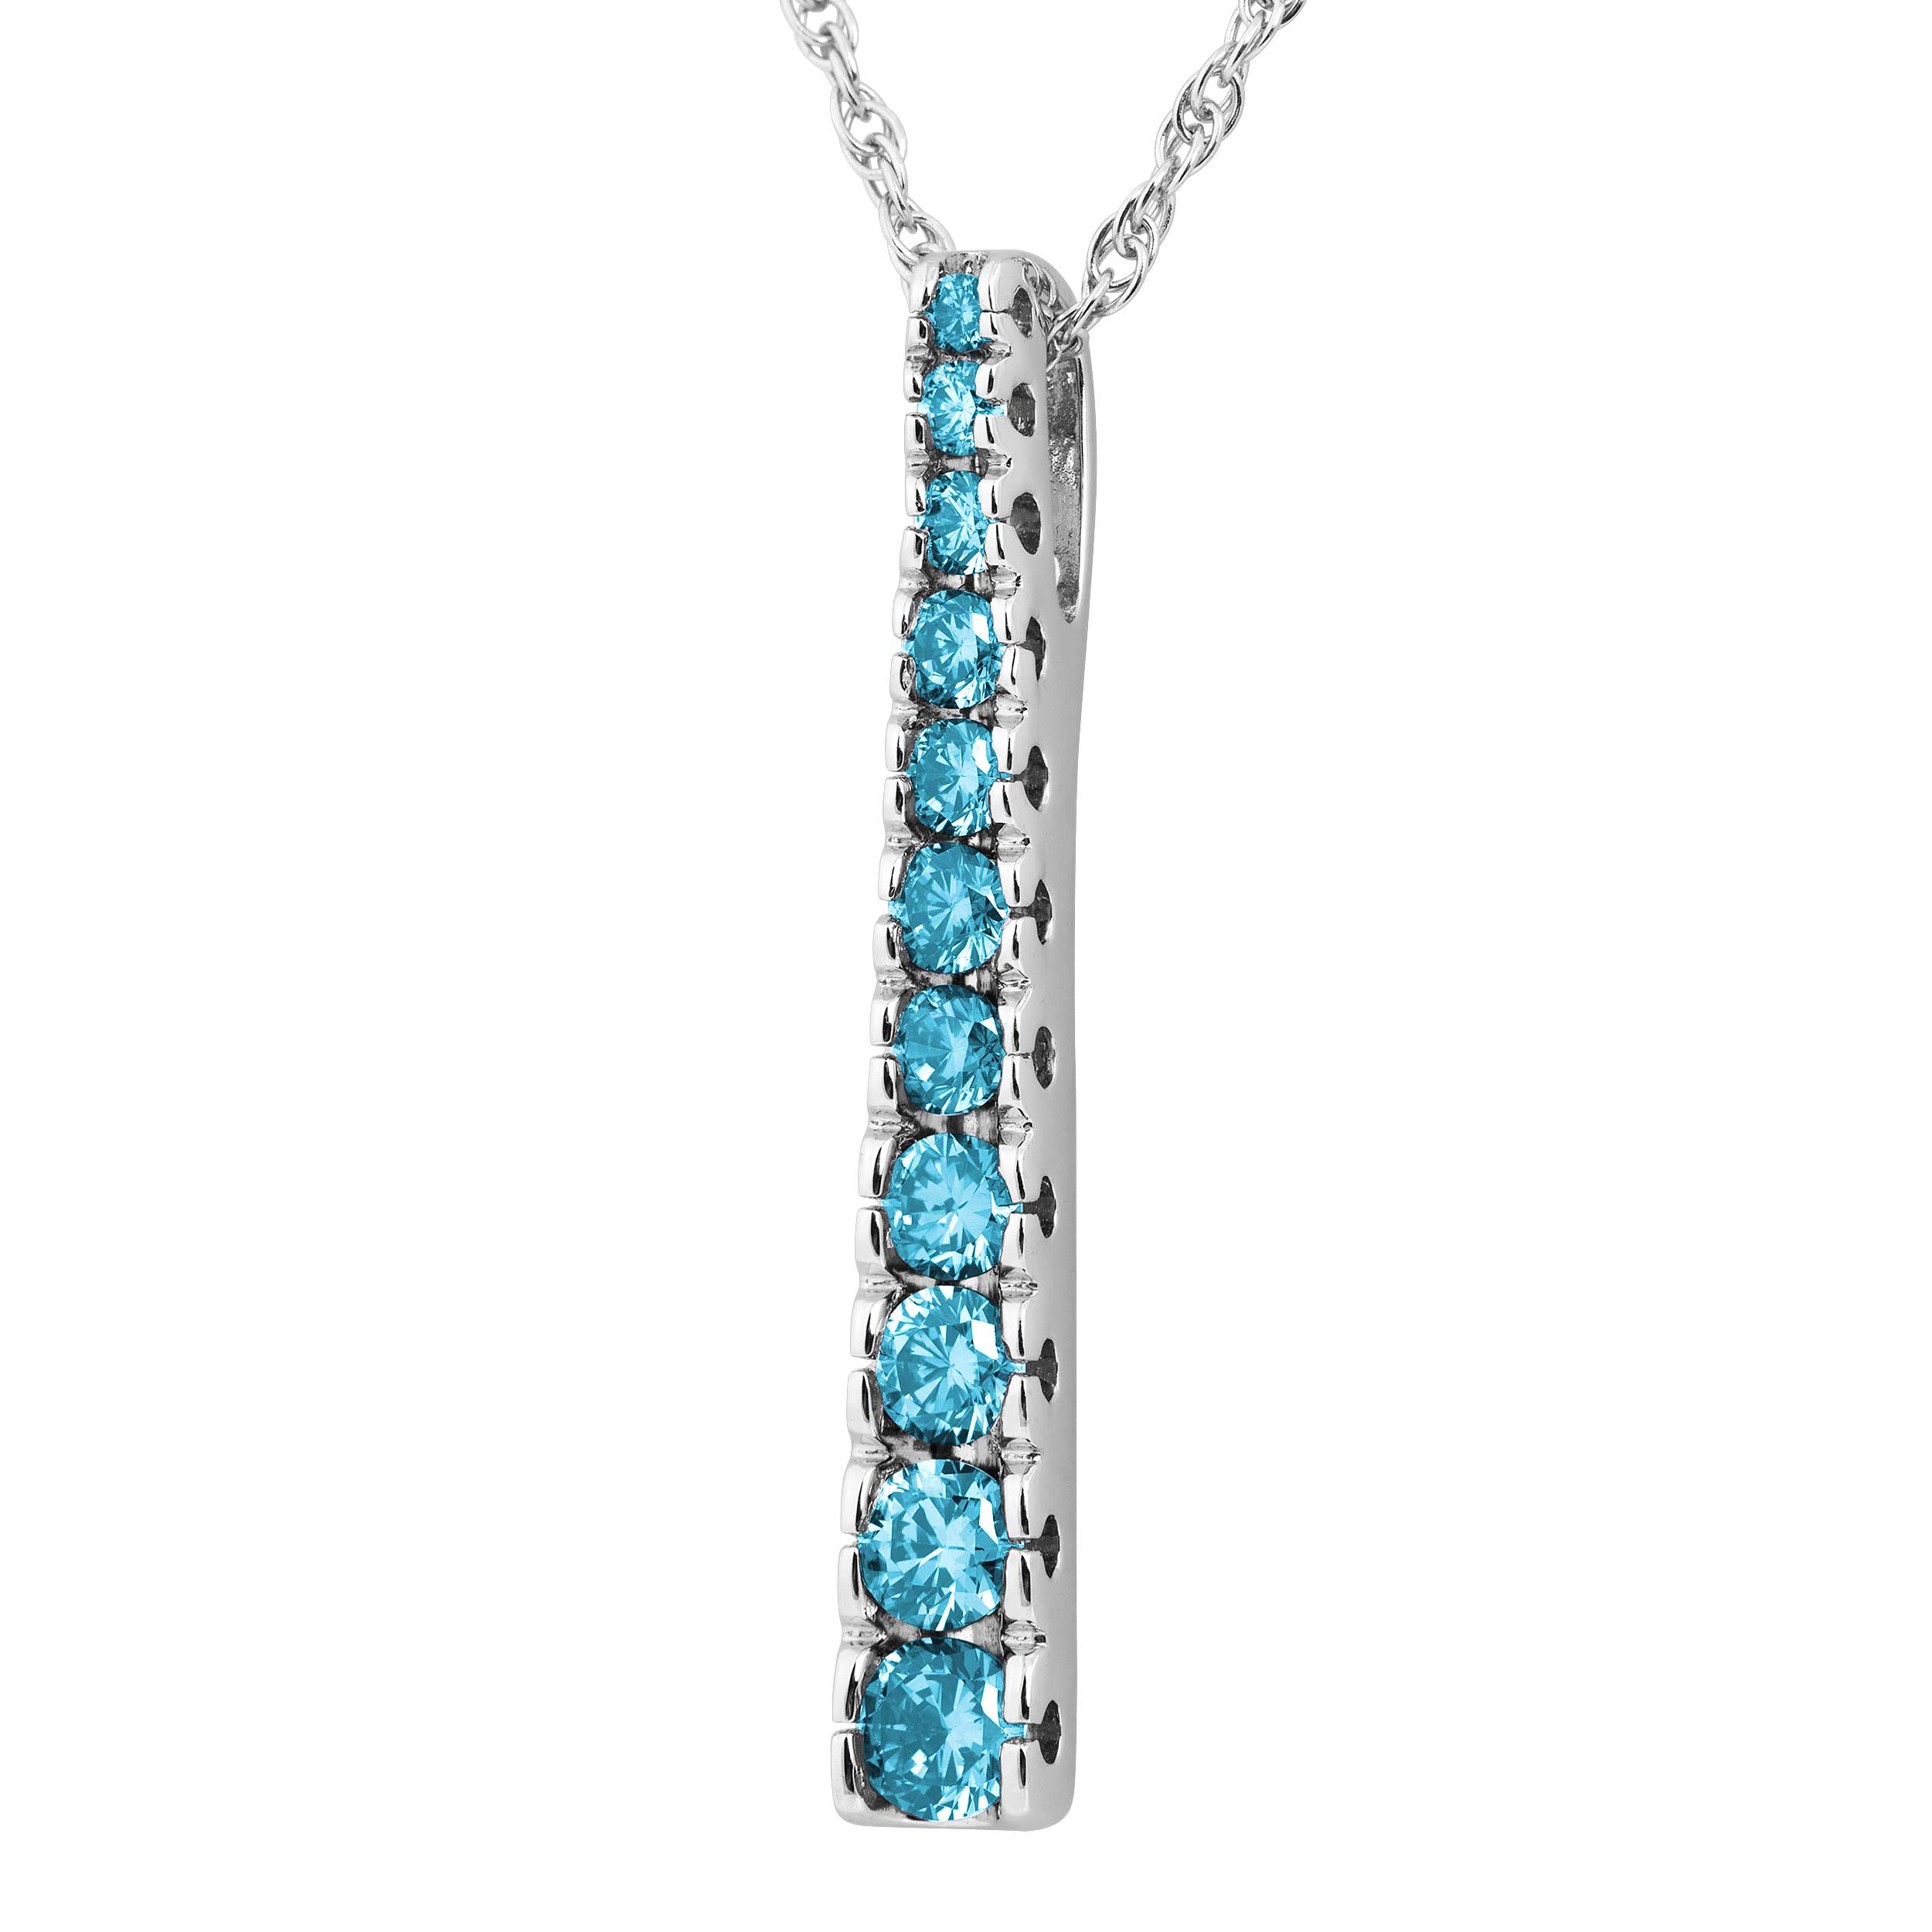  Swiss Blue Topaz Gradual Pendant Necklace, Rhodium Plated Sterling Silver